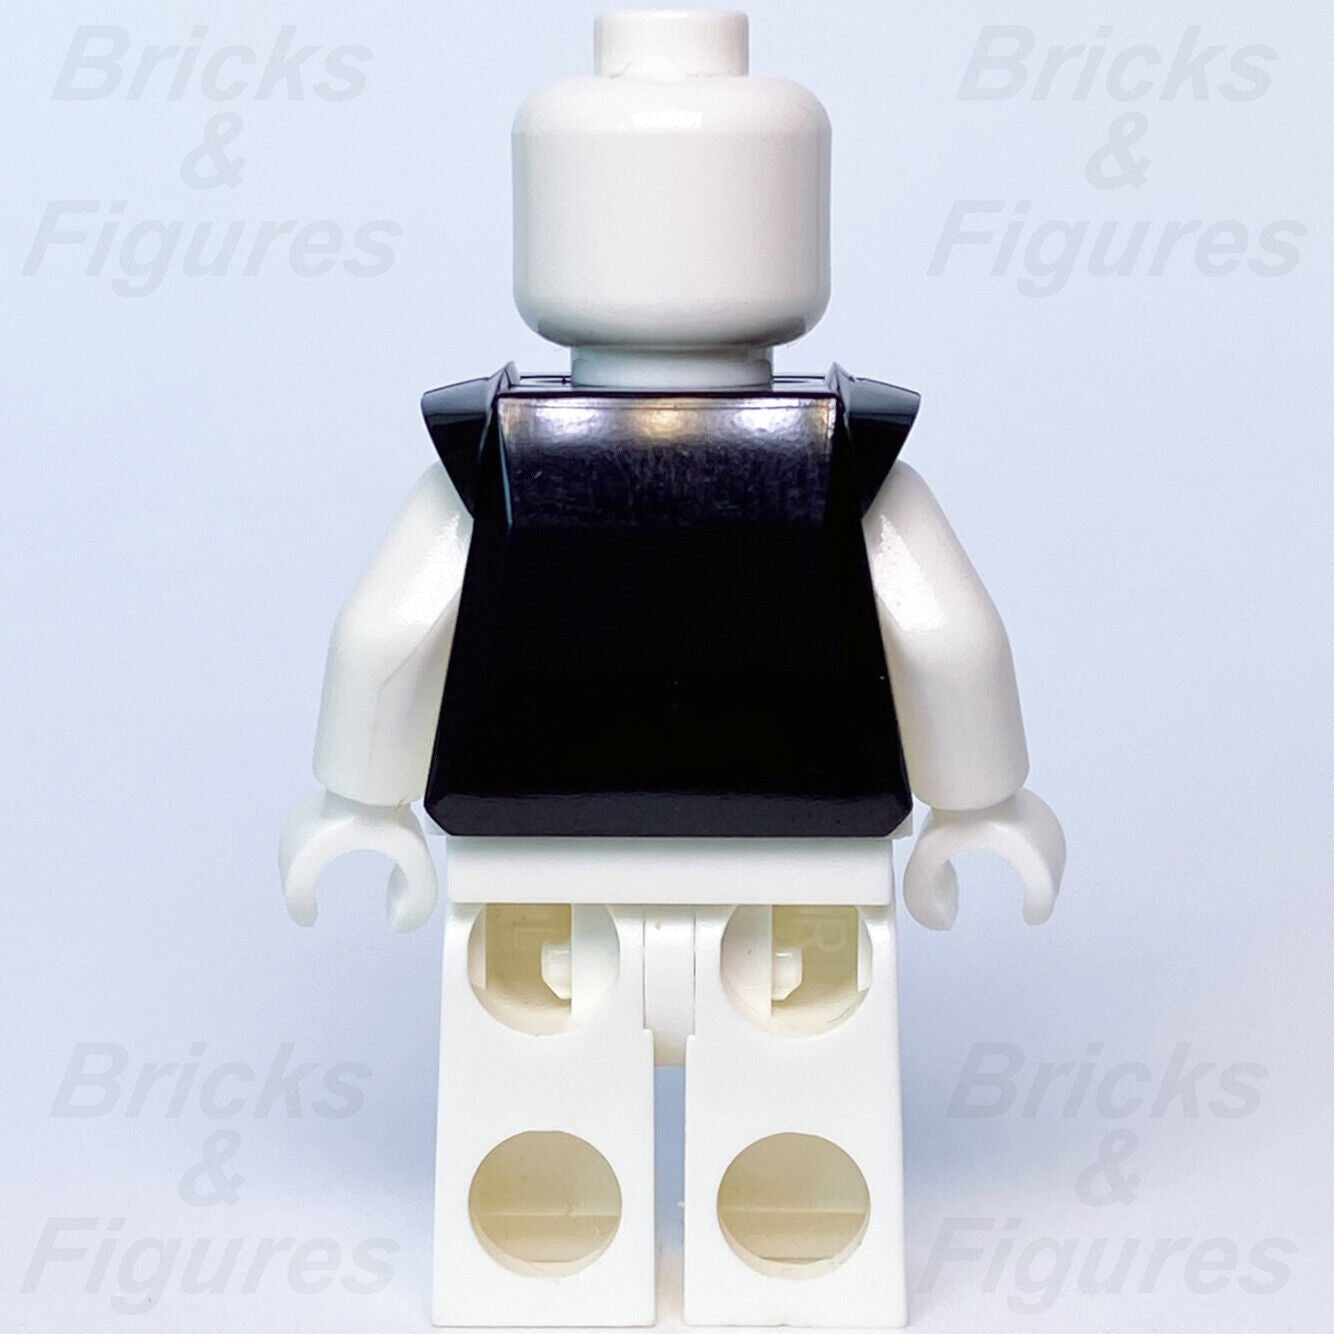 LEGO Dragon Head Breastplate Armour Castle Knight Minifigure Part 2587pb33 New - Bricks & Figures